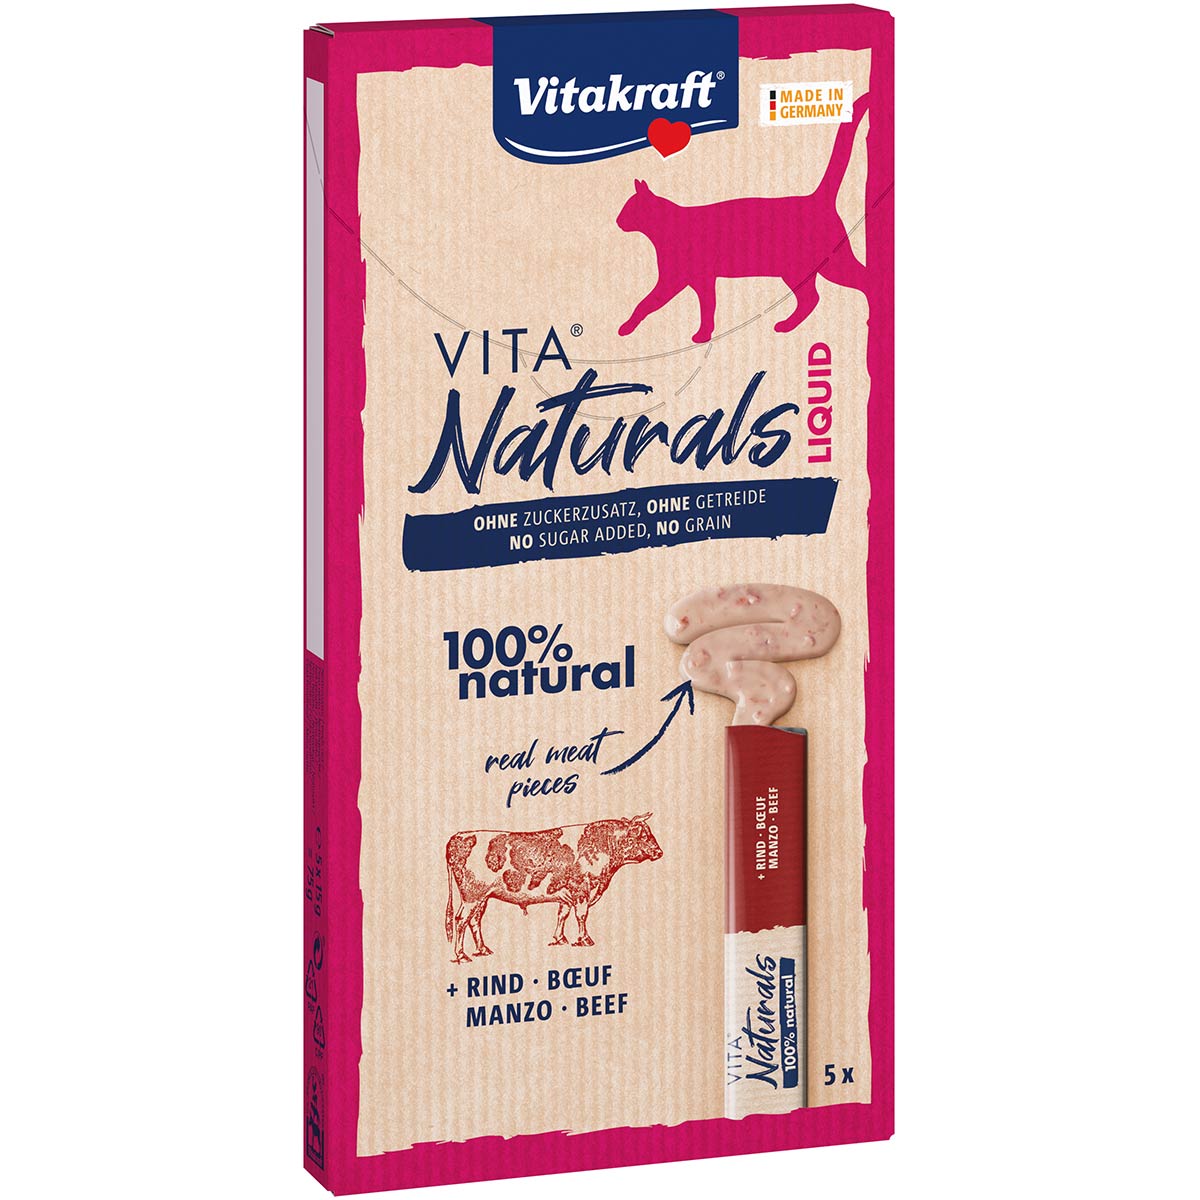 Vitakraft Vita Naturals Liquid Snack Rind 11 x 5 St